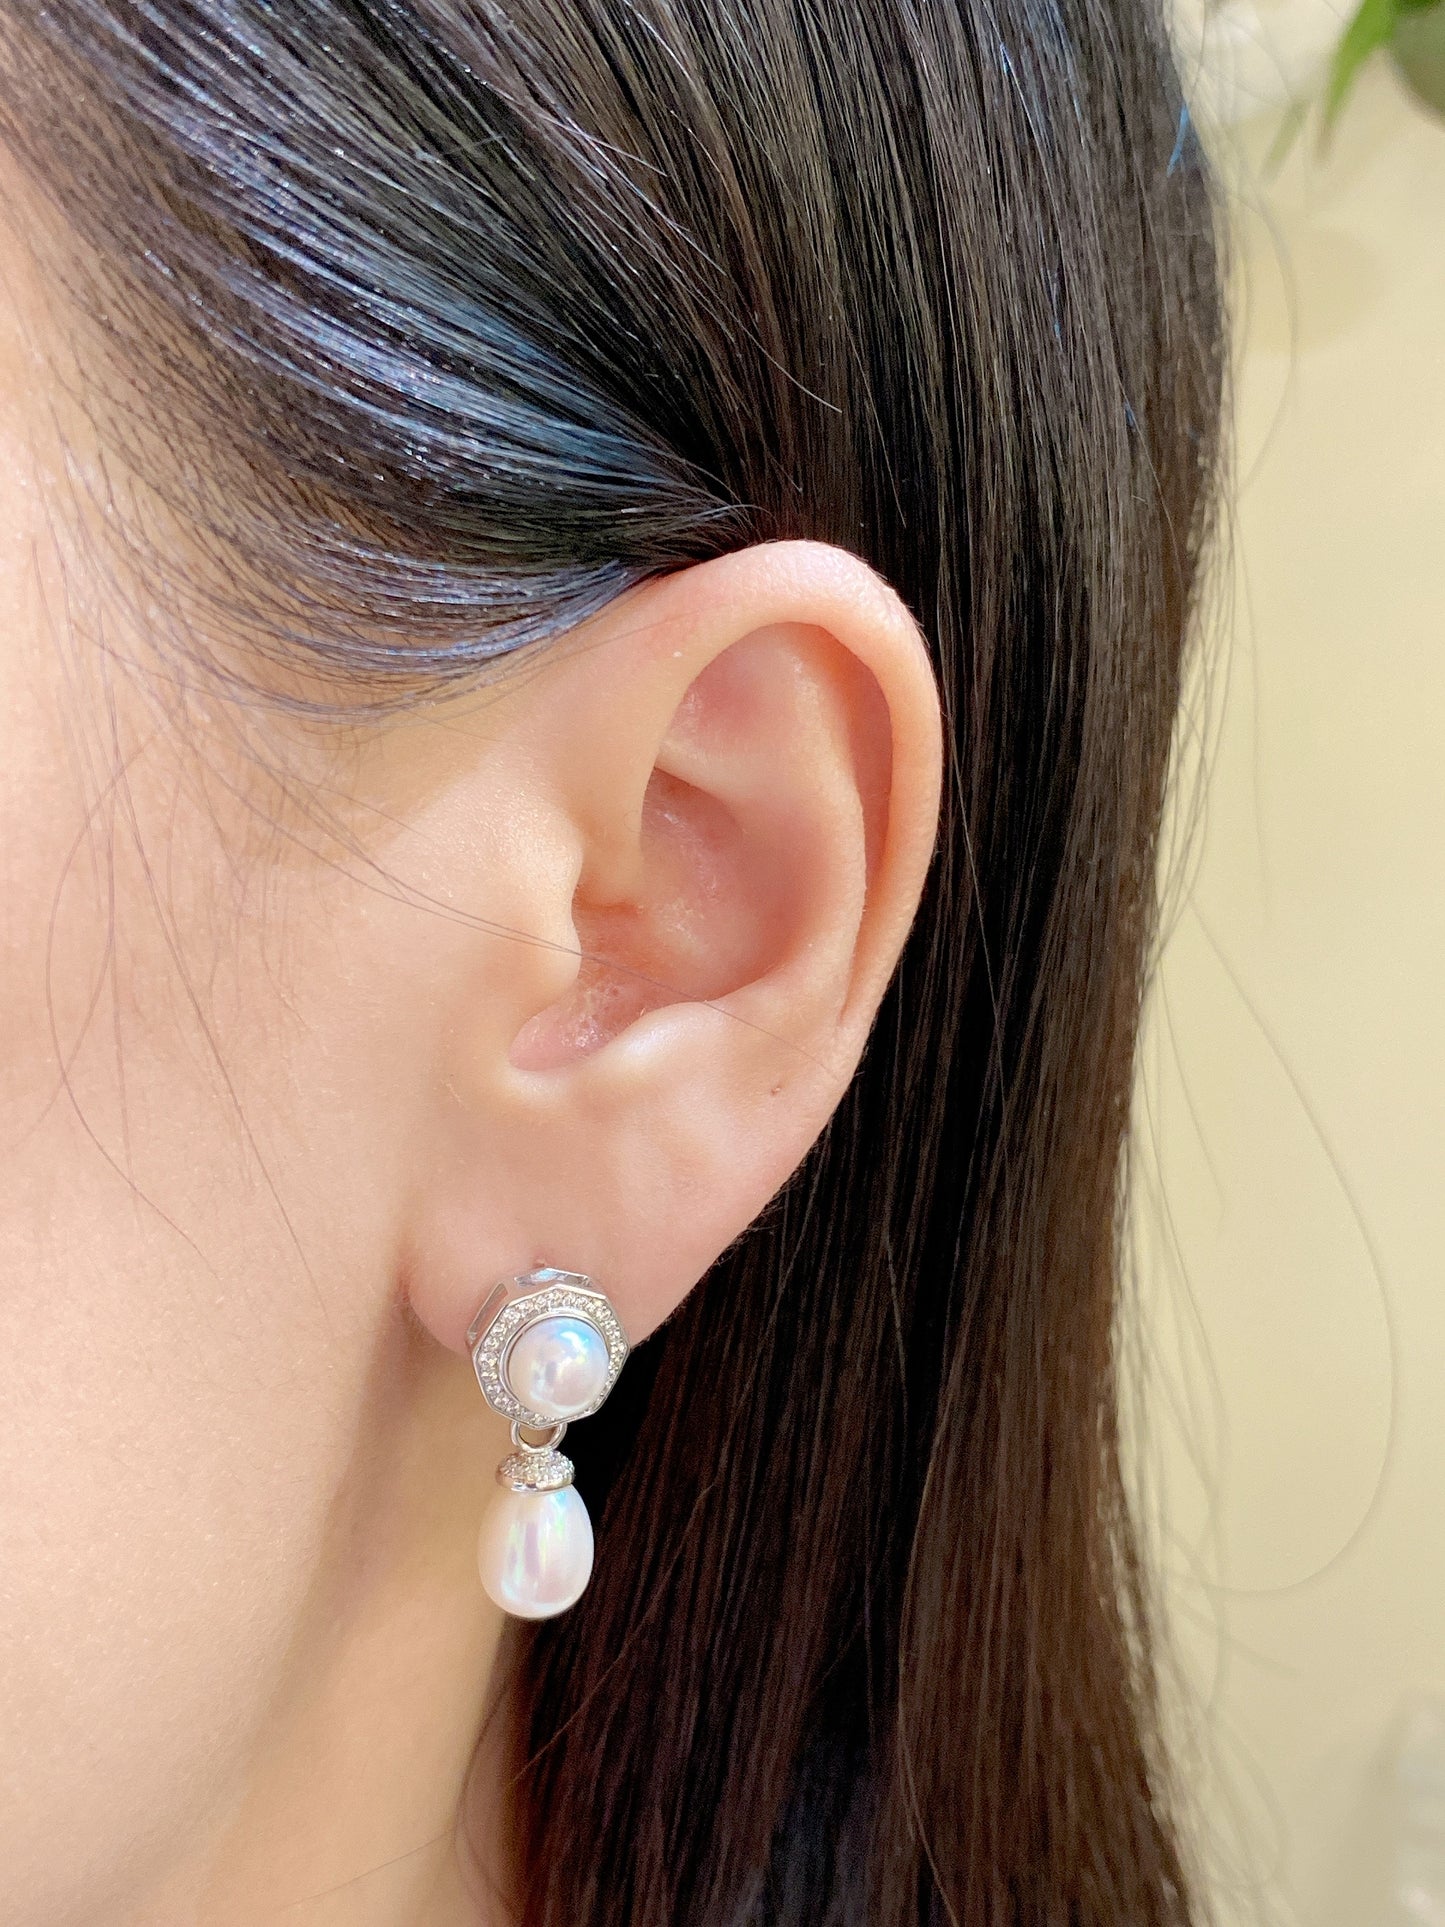 White Gold Plated Sterling Silver Freshwater Pearl Detachable Earrings, ER20